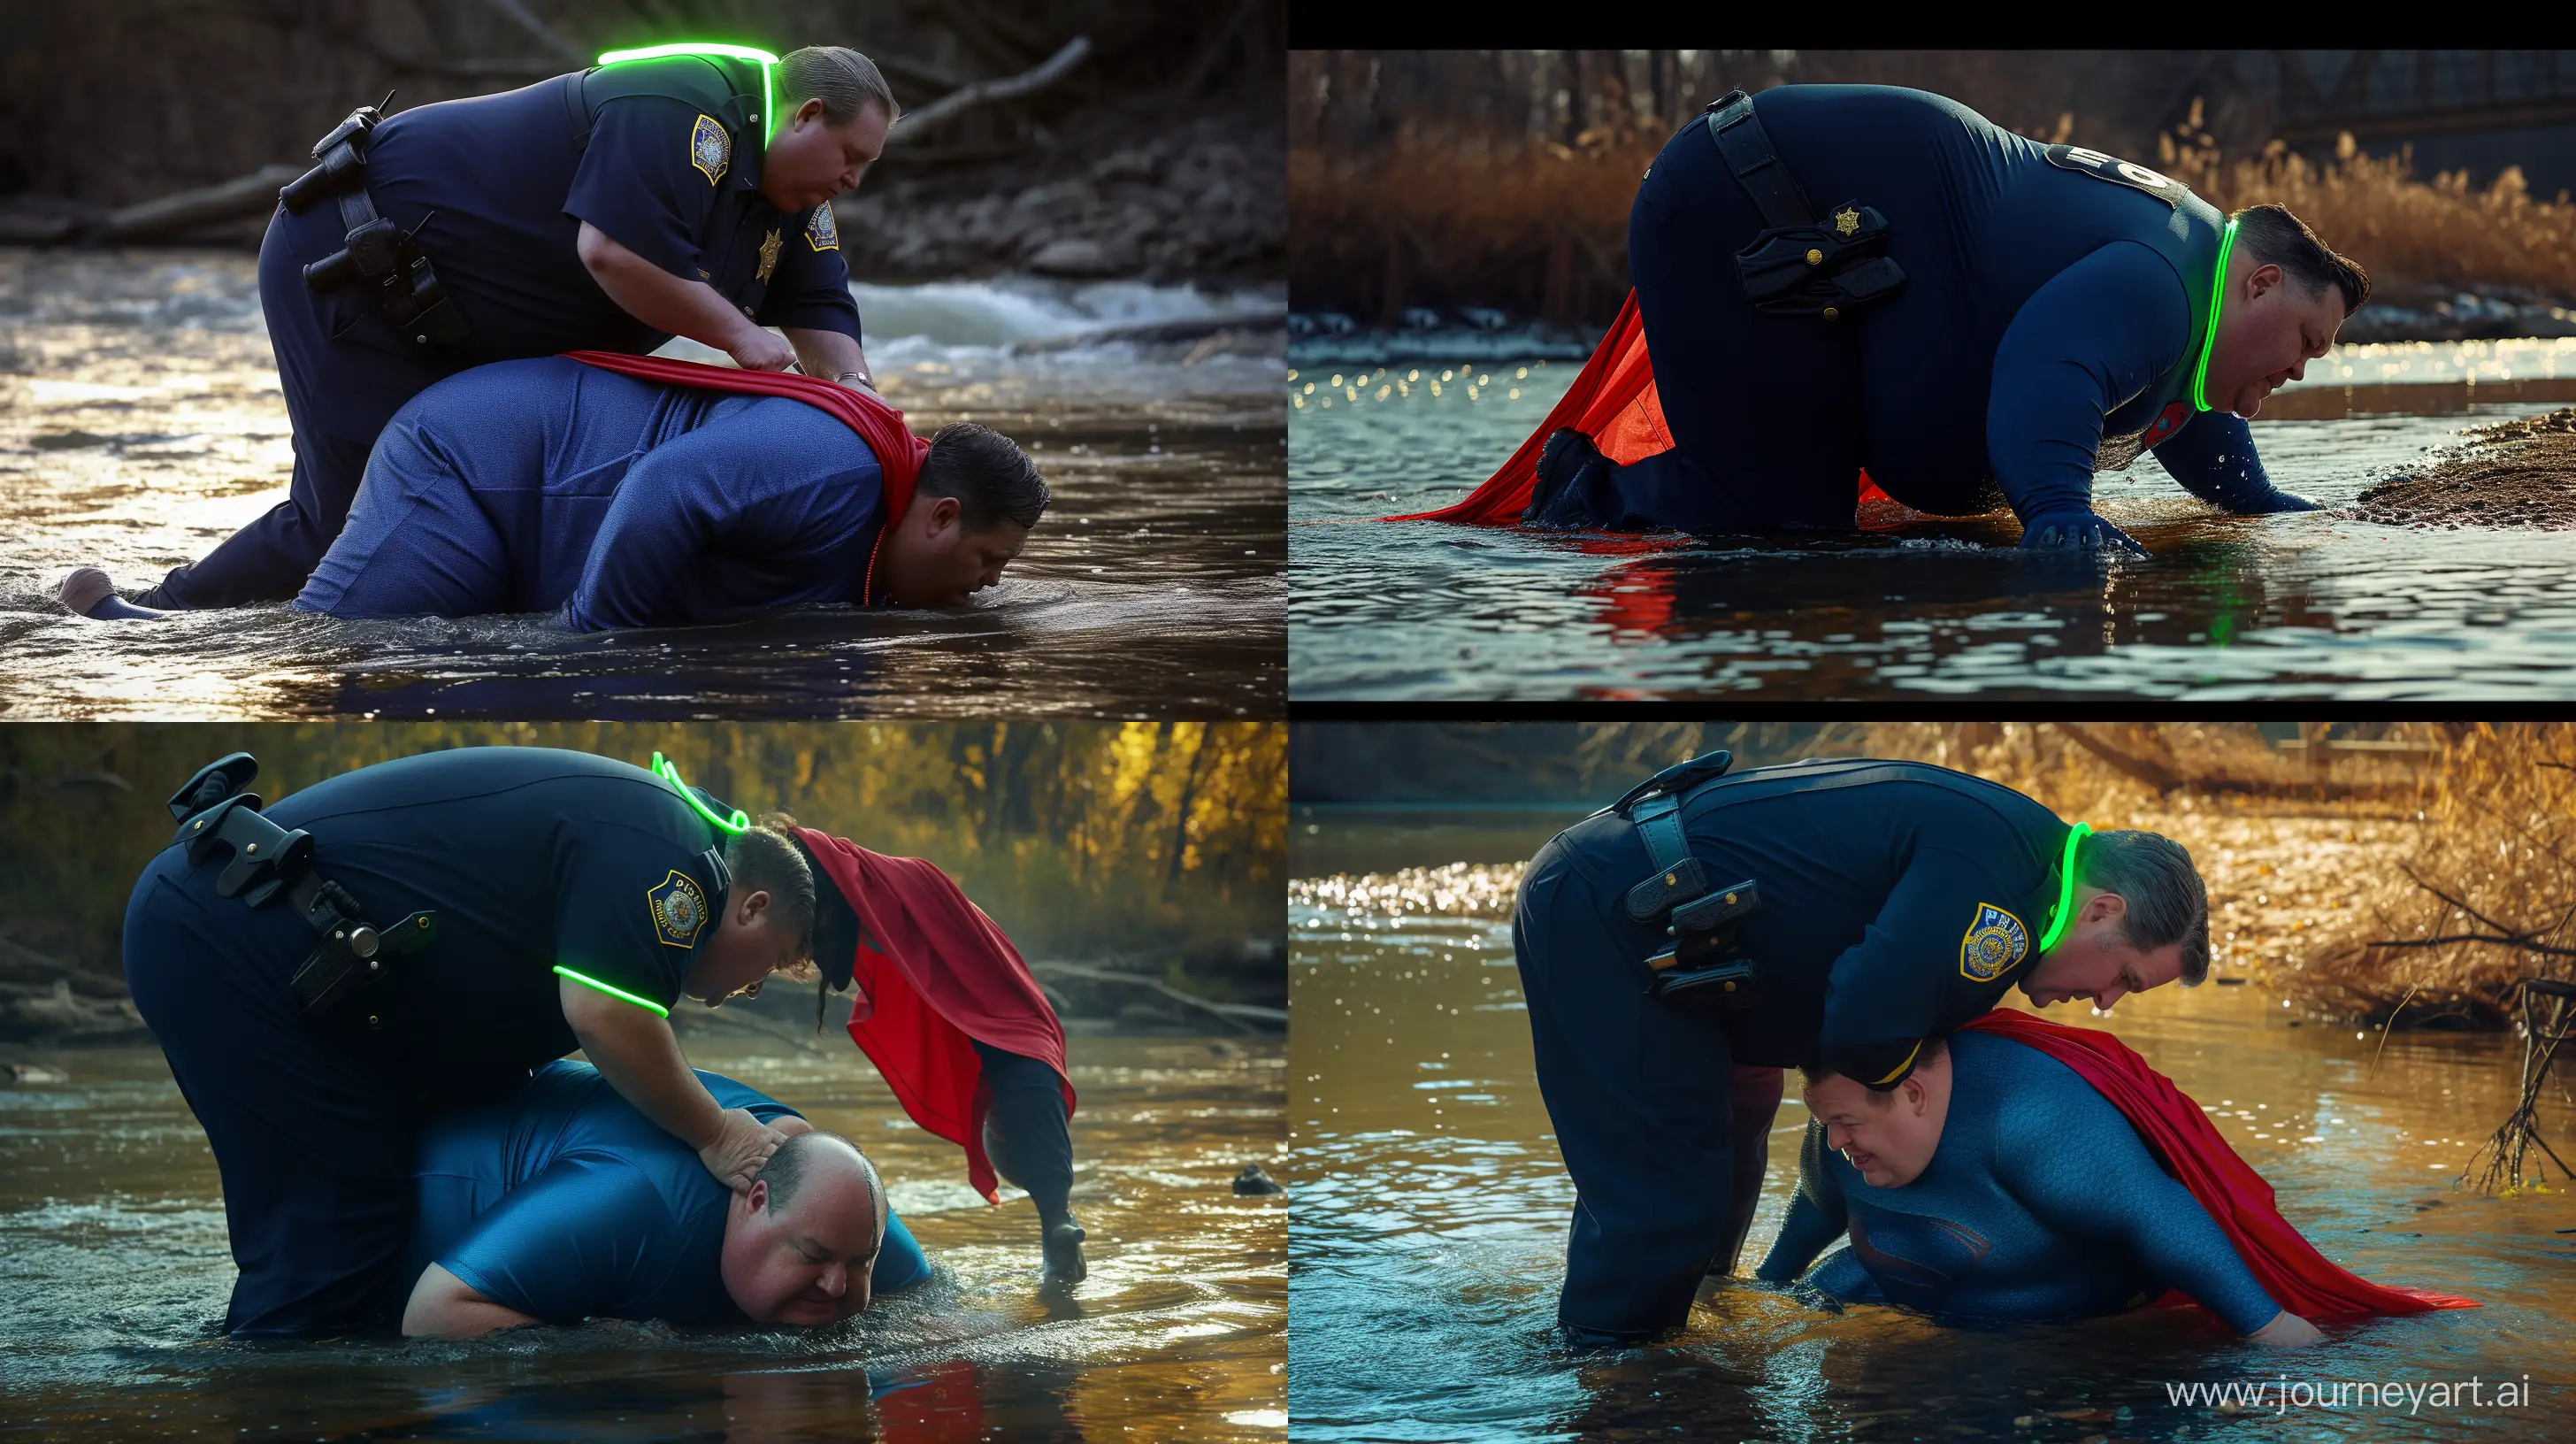 Elderly-Superman-in-Navy-Police-Uniform-Tightening-Green-Neon-Dog-Collar-in-River